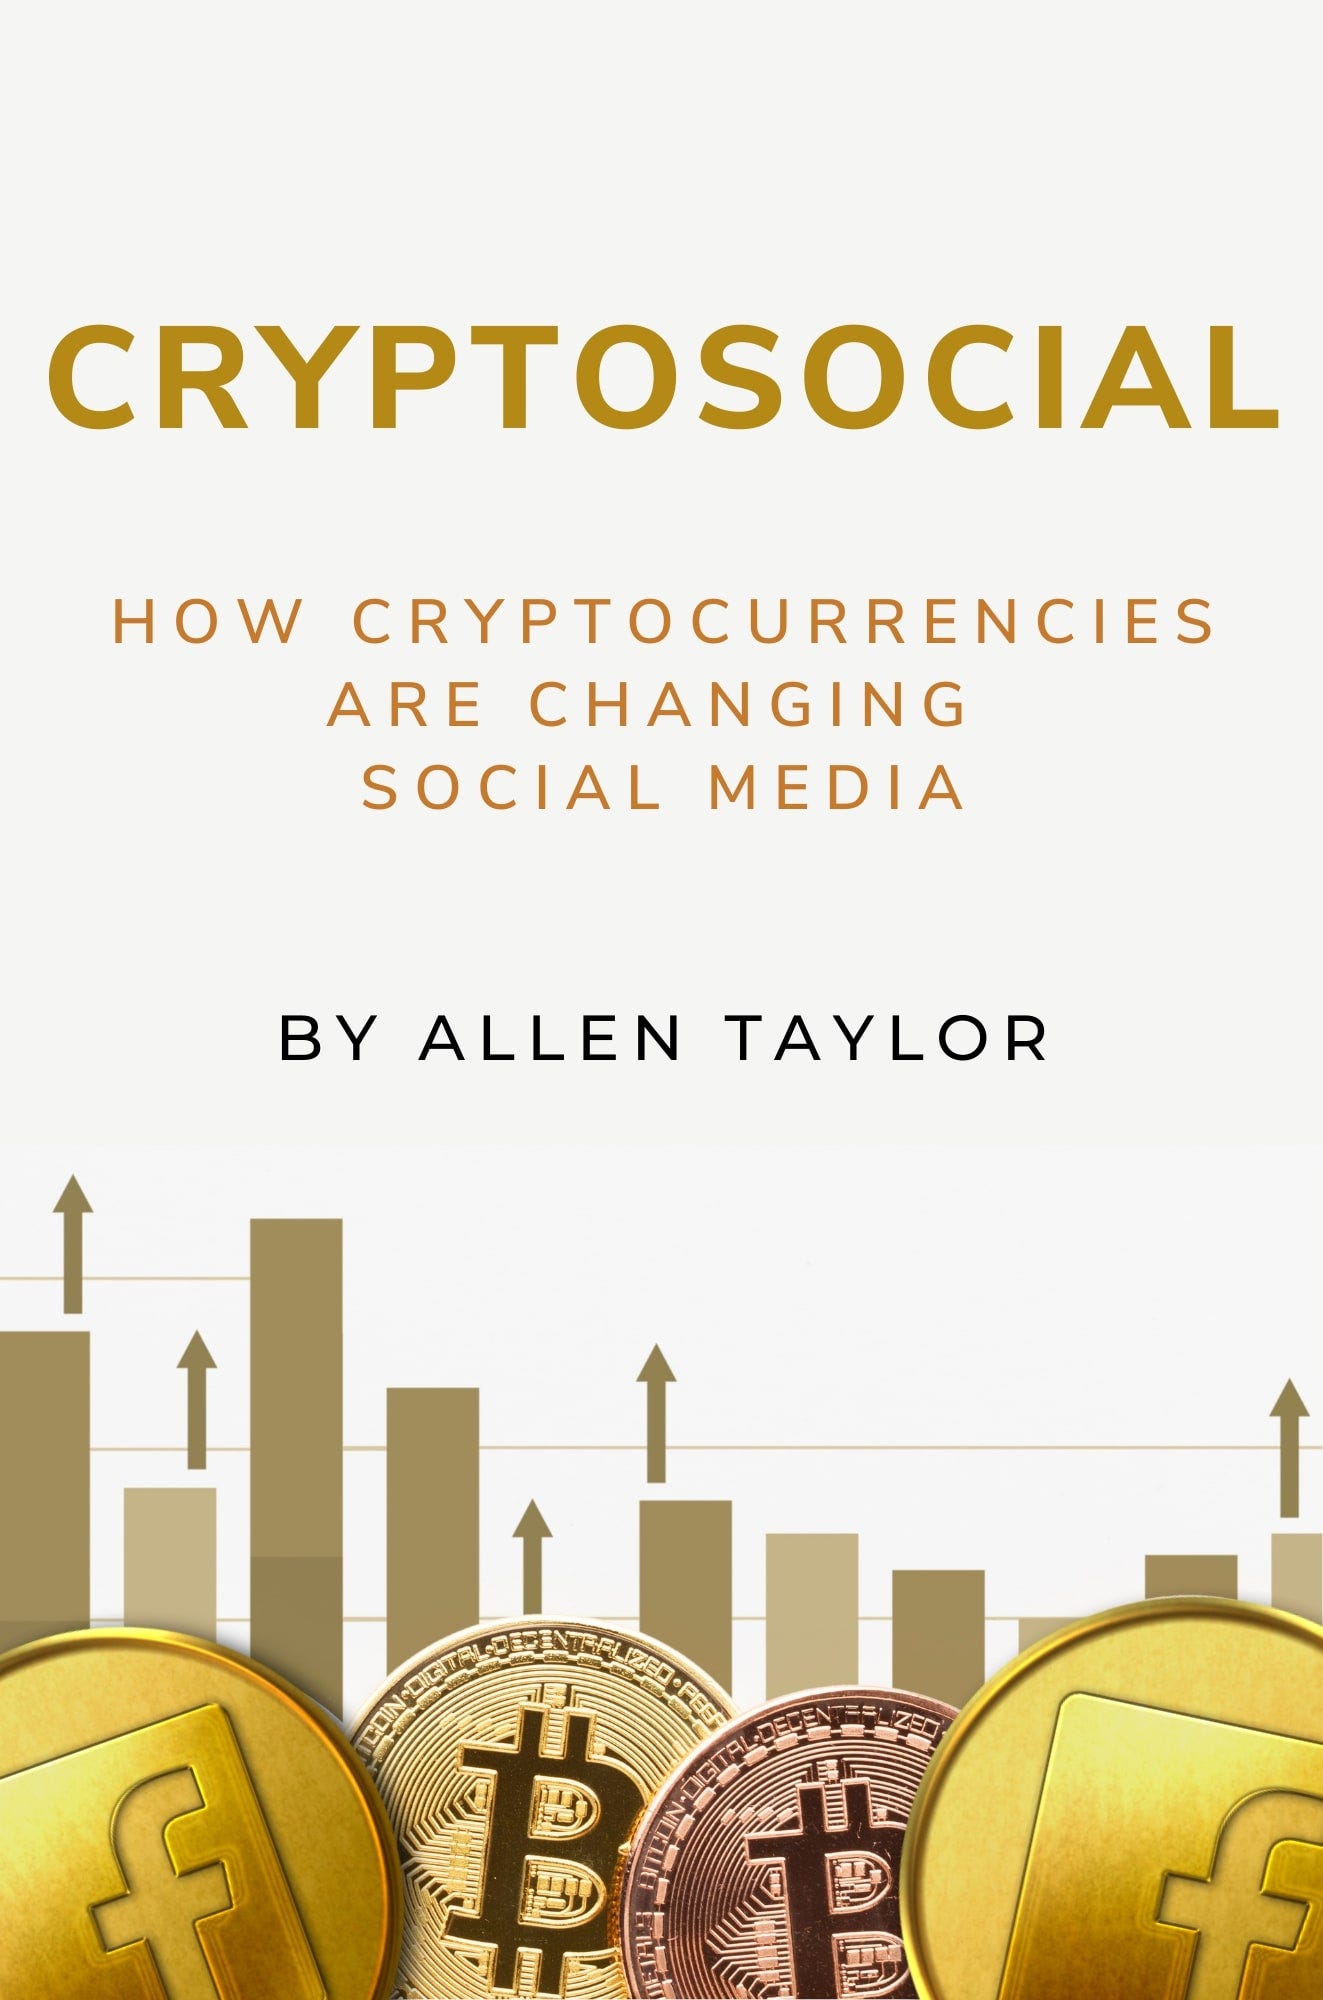 Cryptosocial Cryptocurrencies Social Media